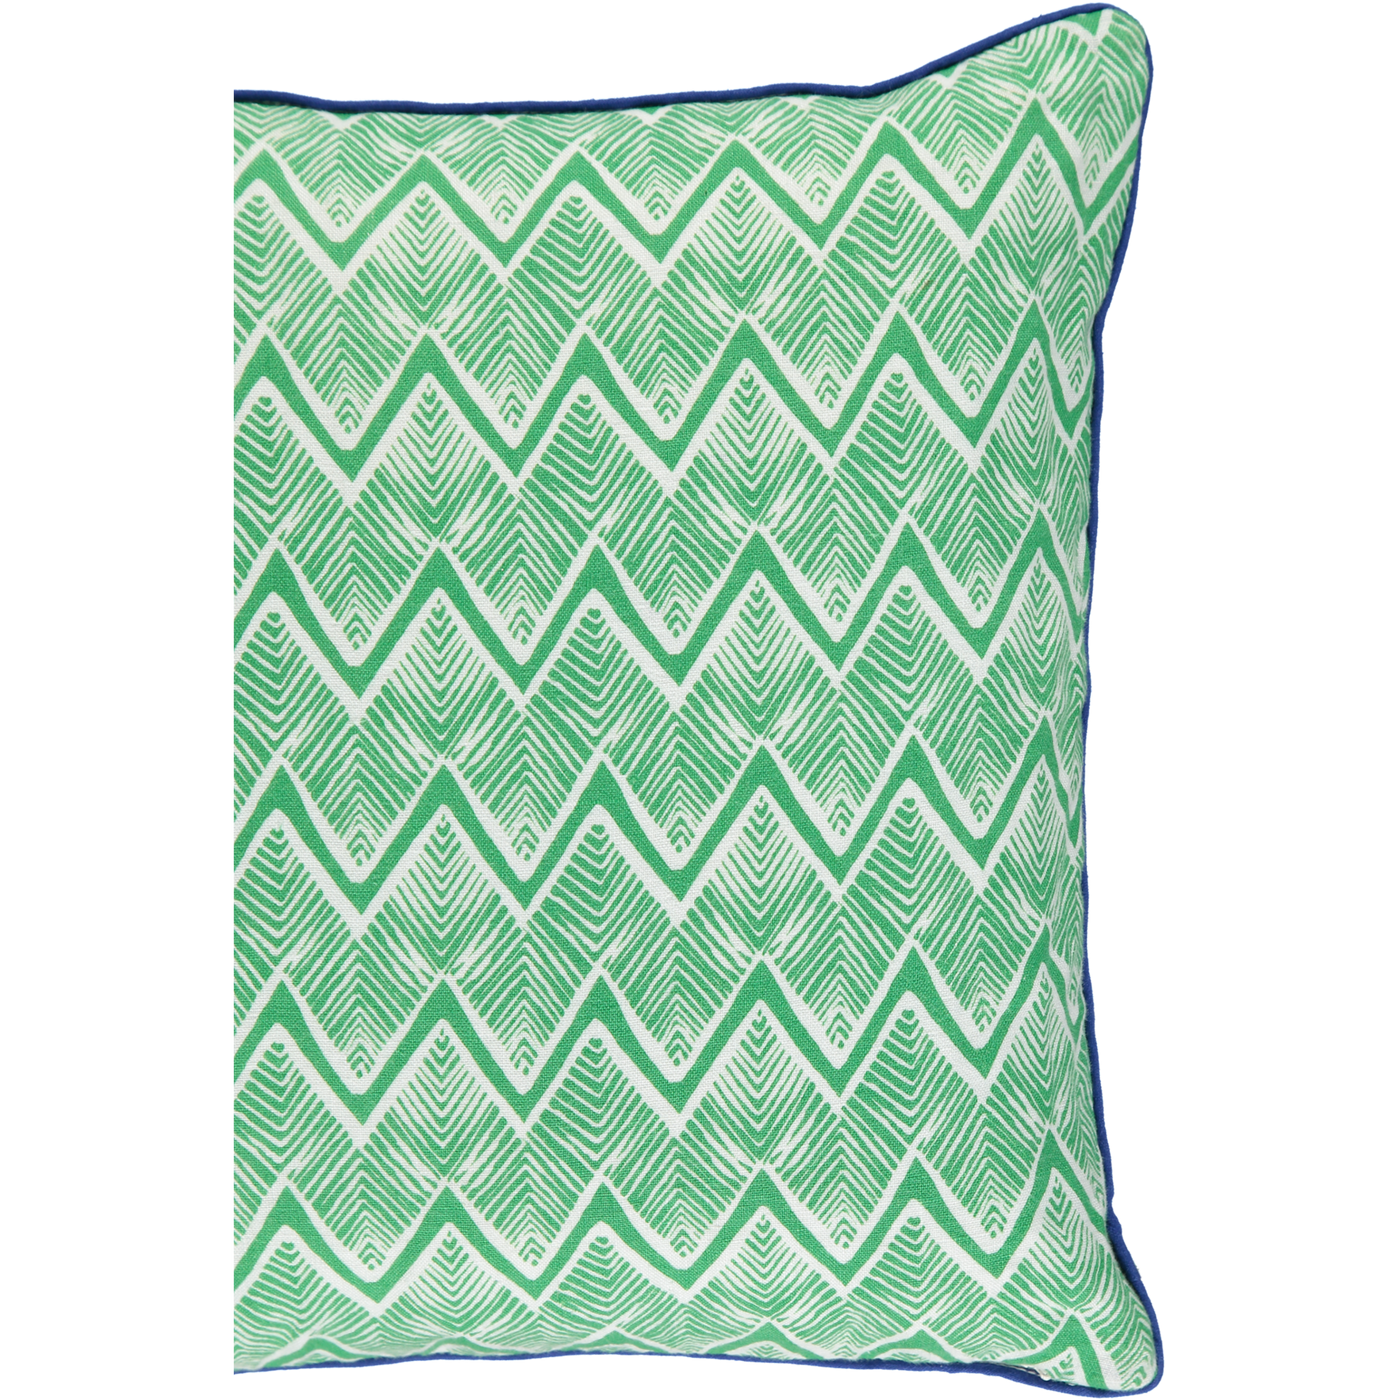 Kitty Holmes Green Cushion cover zig zag print